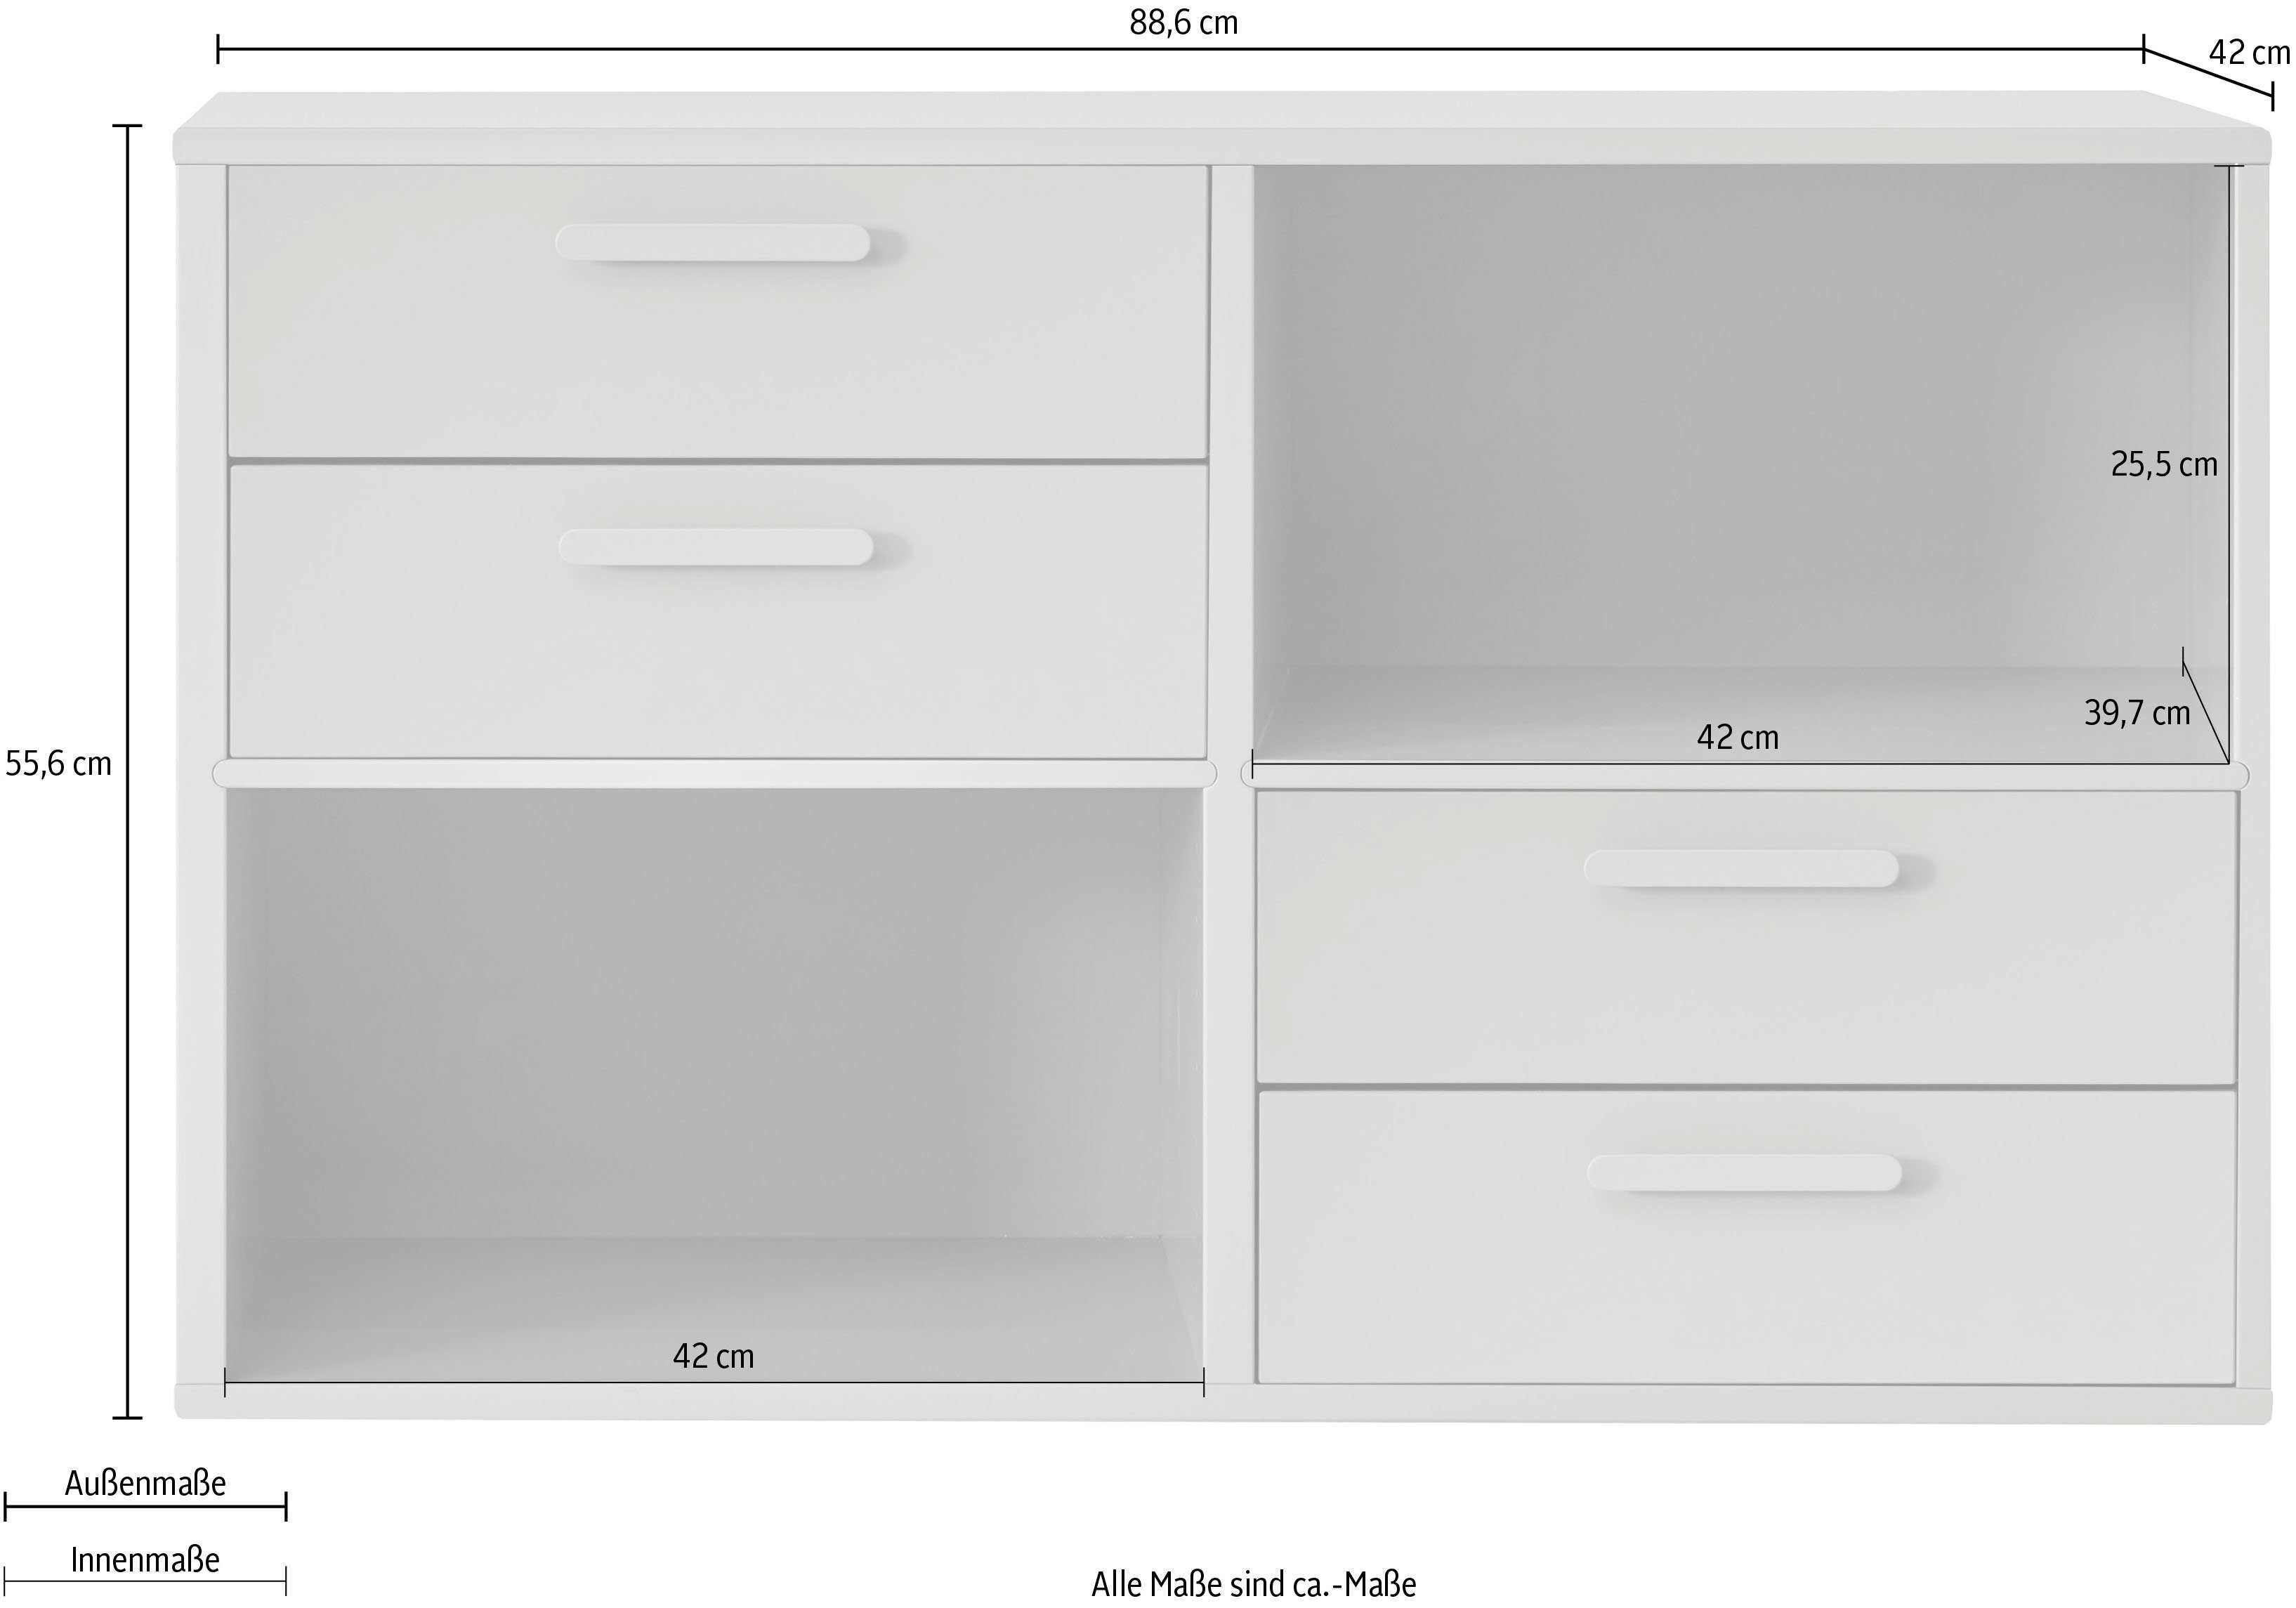 Möbelserie Hellgrün mit flexible Hellgrün by Hammel, cm, Breite Regal 88,6 | Keep Hammel Furniture Türen, 2